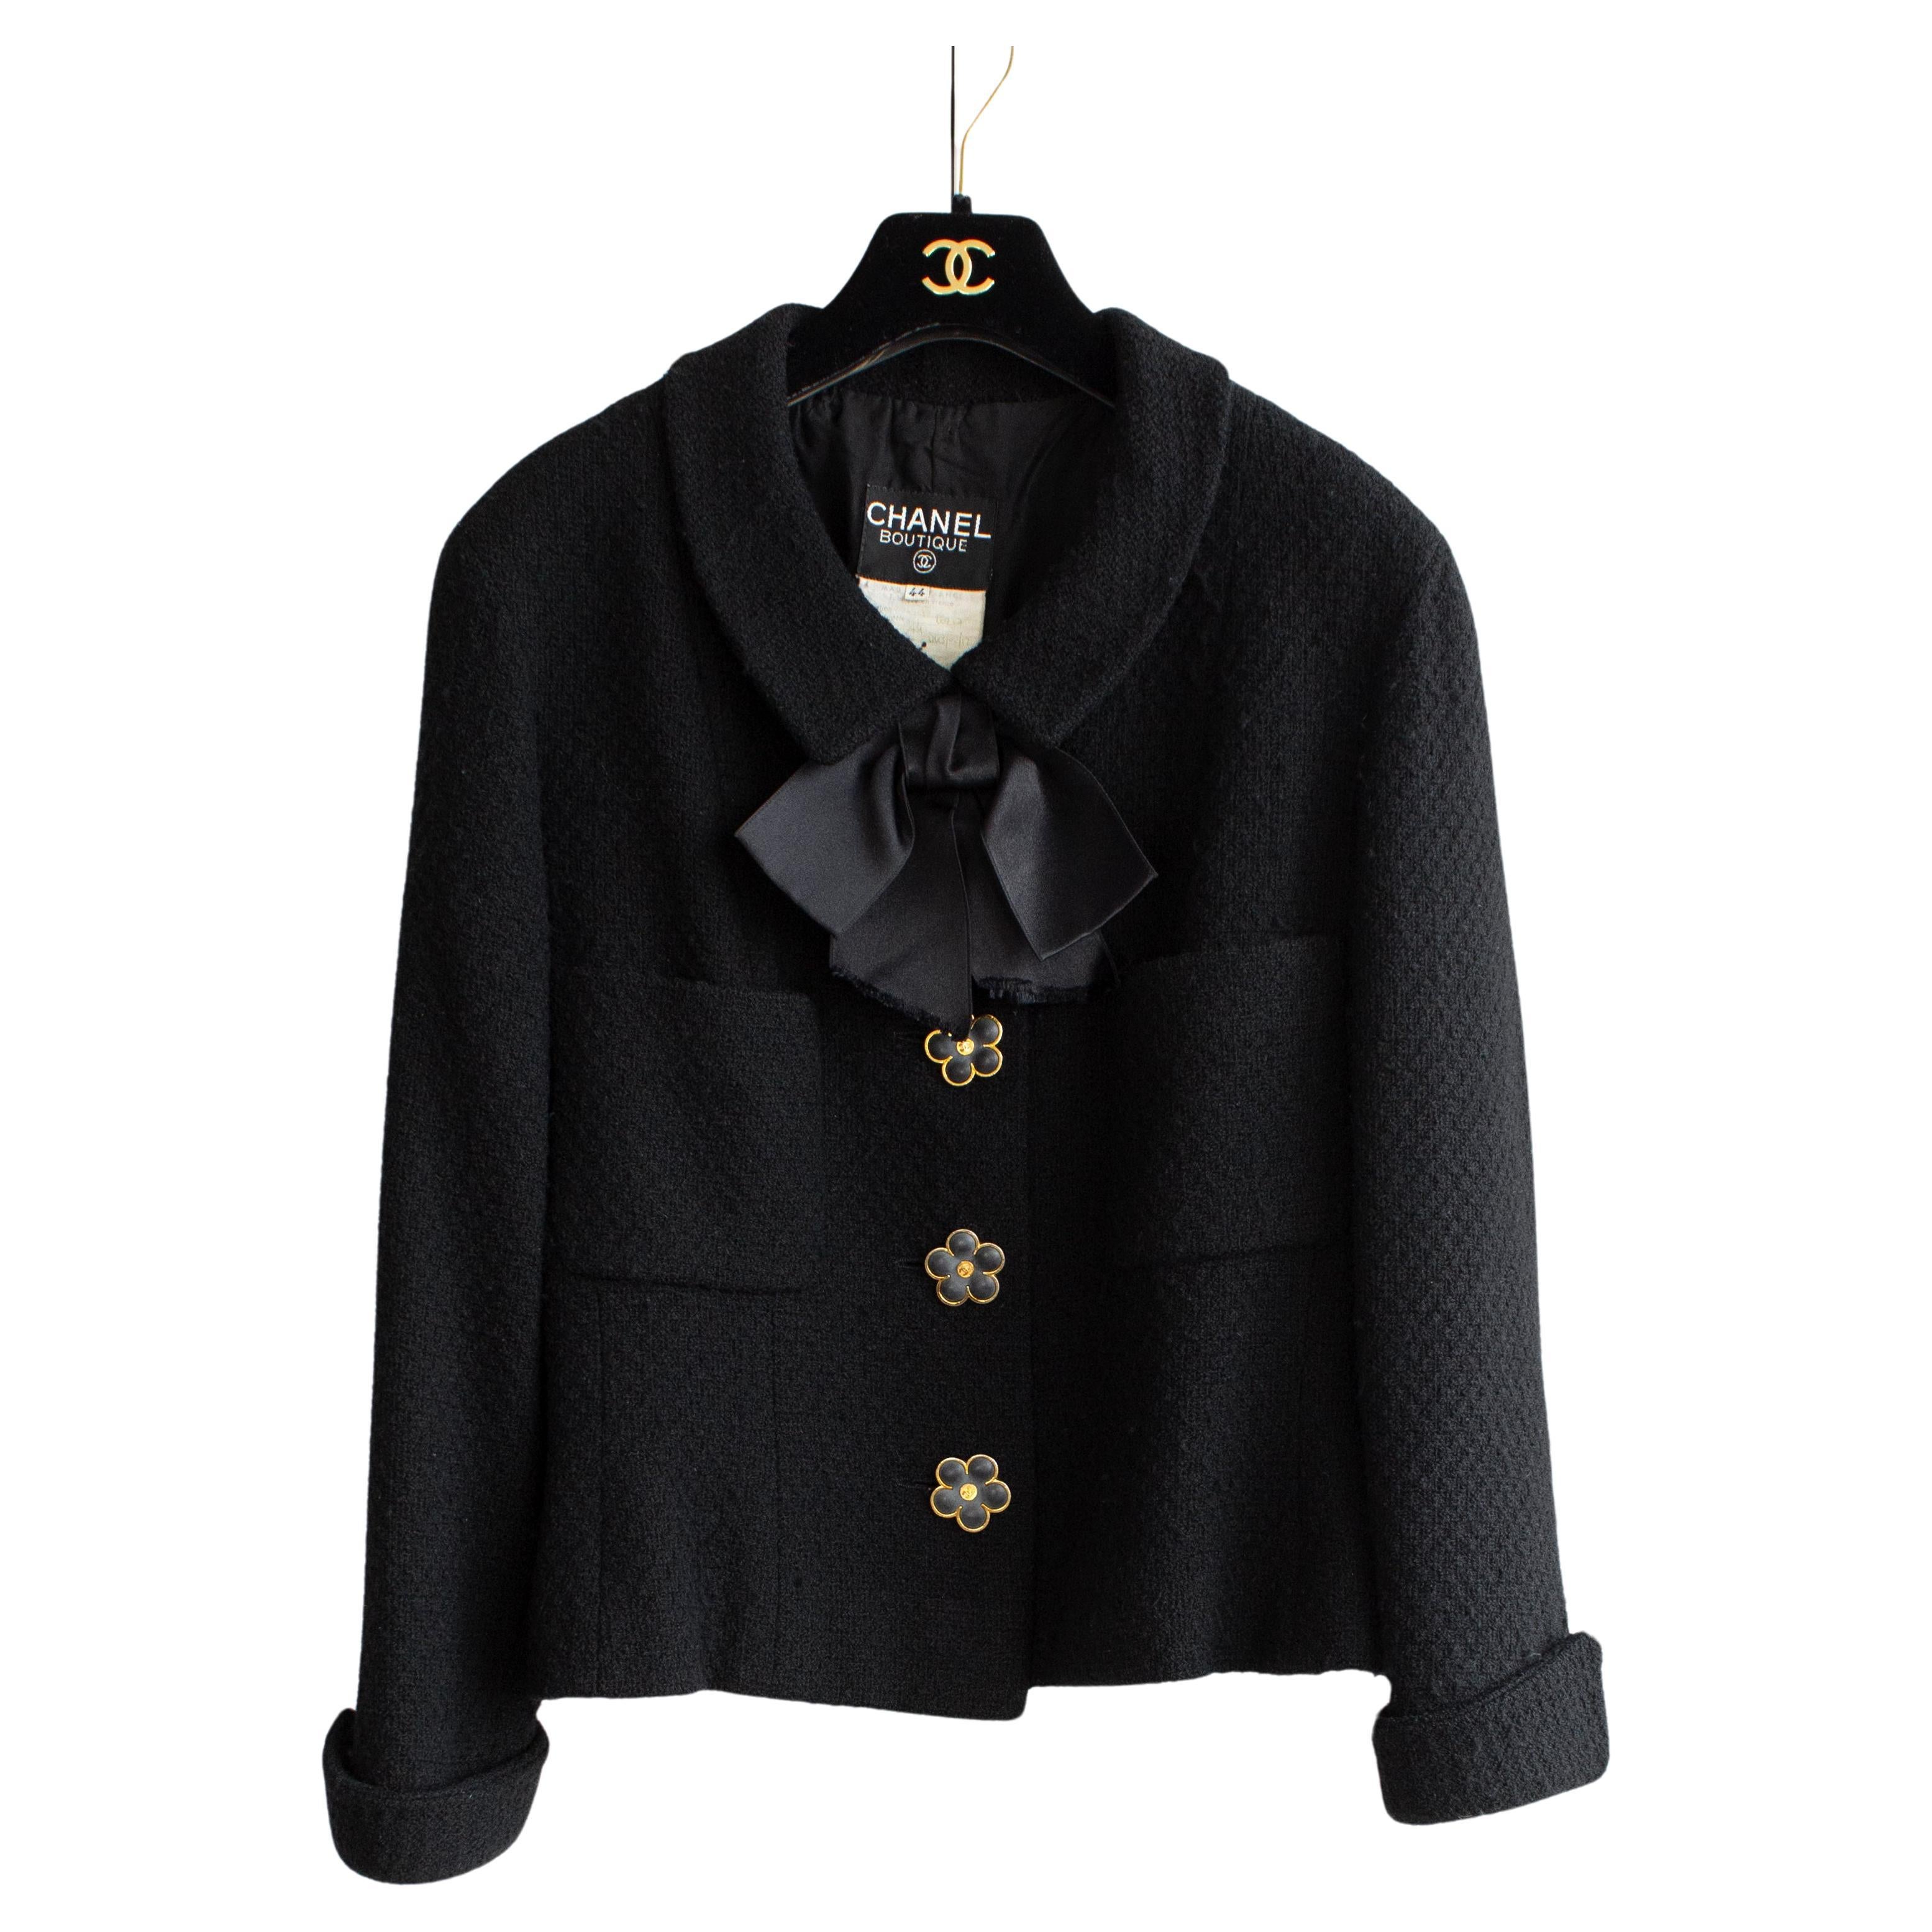 Chanel Vintage Spring/Summer 1991 Black Flower Button Tweed Jacket